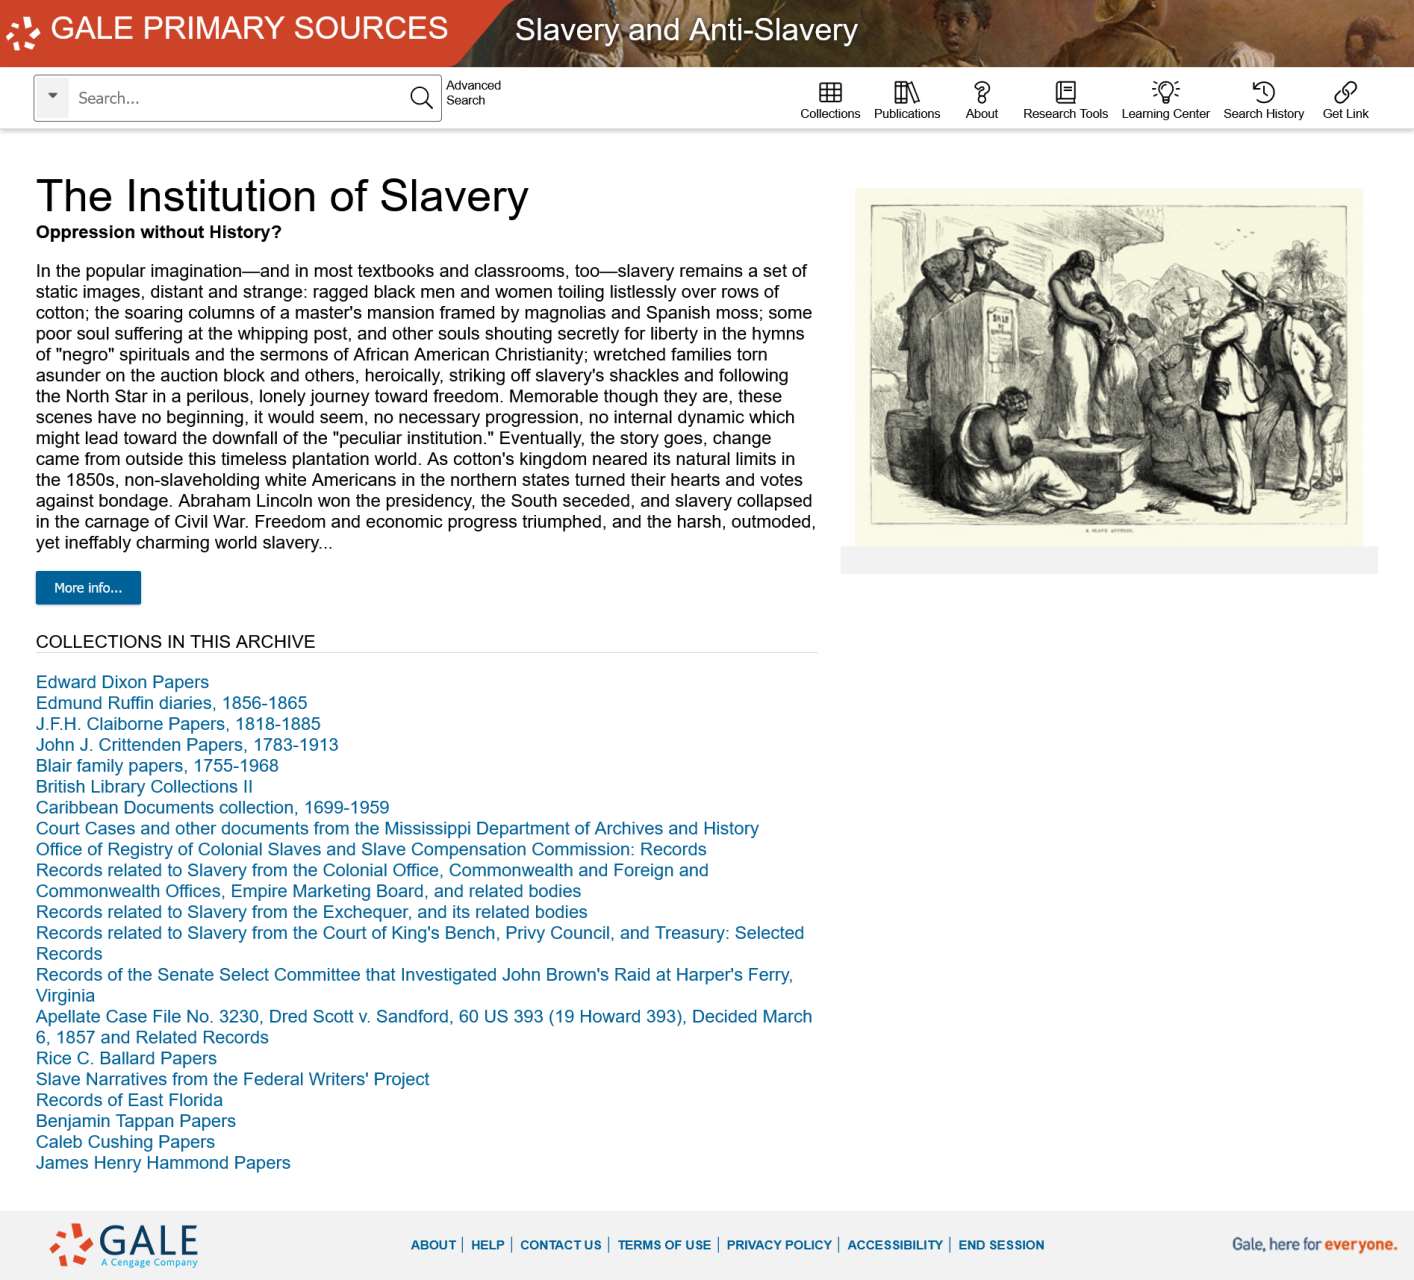 Slavery and Anti-Slavery: A Transnational Archive第３部の概要画面